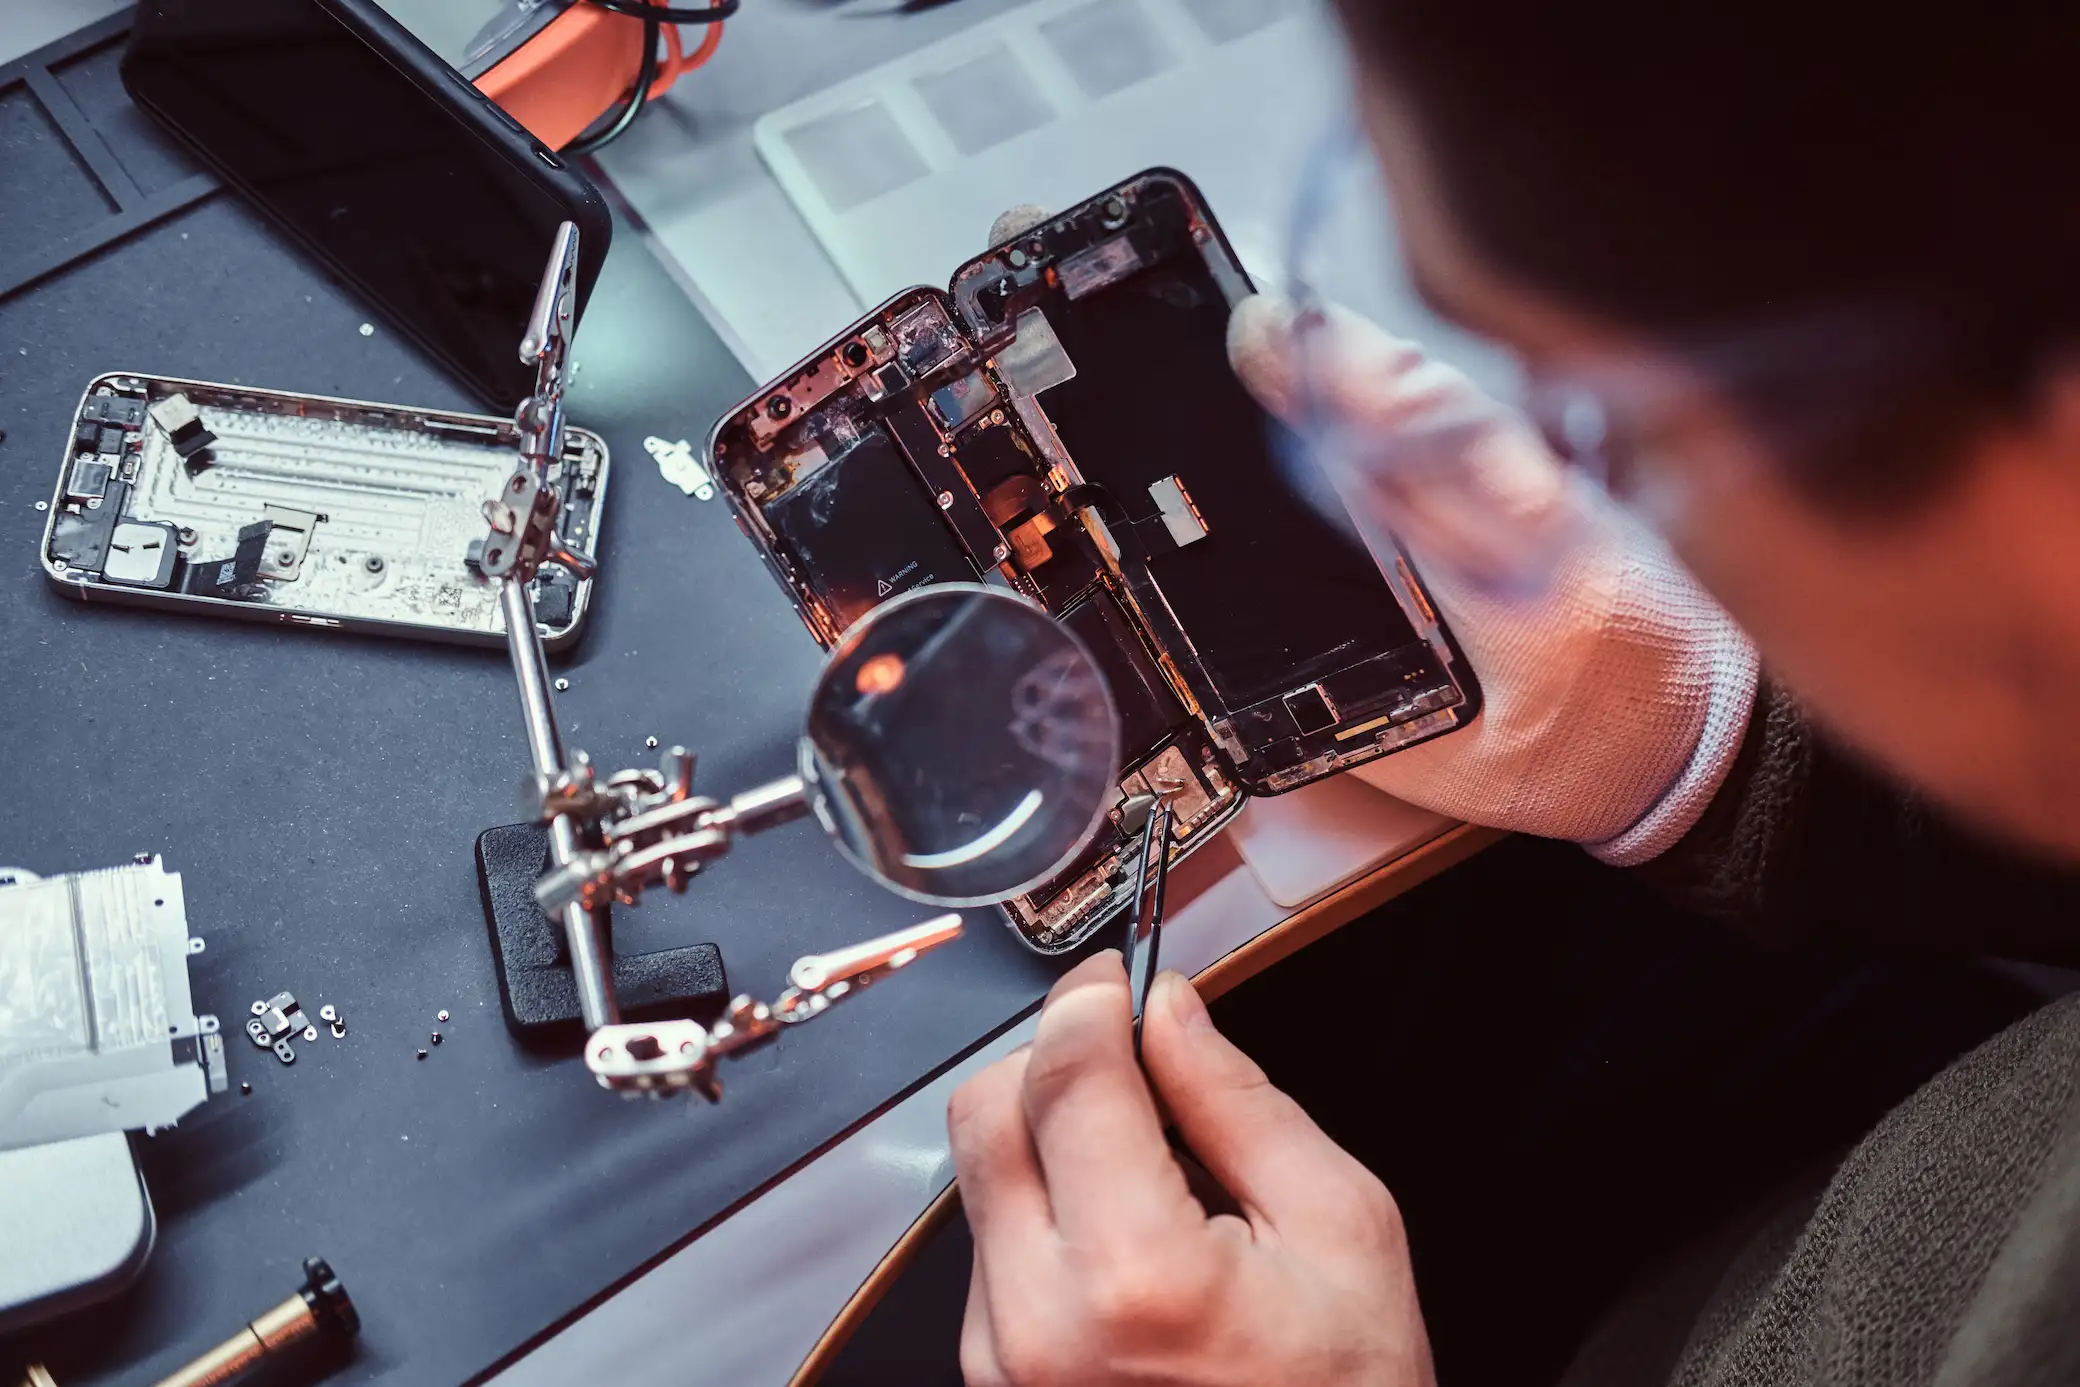 repairman uses magnifier tweezers repair damaged smartphone close up photo disassembled smartphone